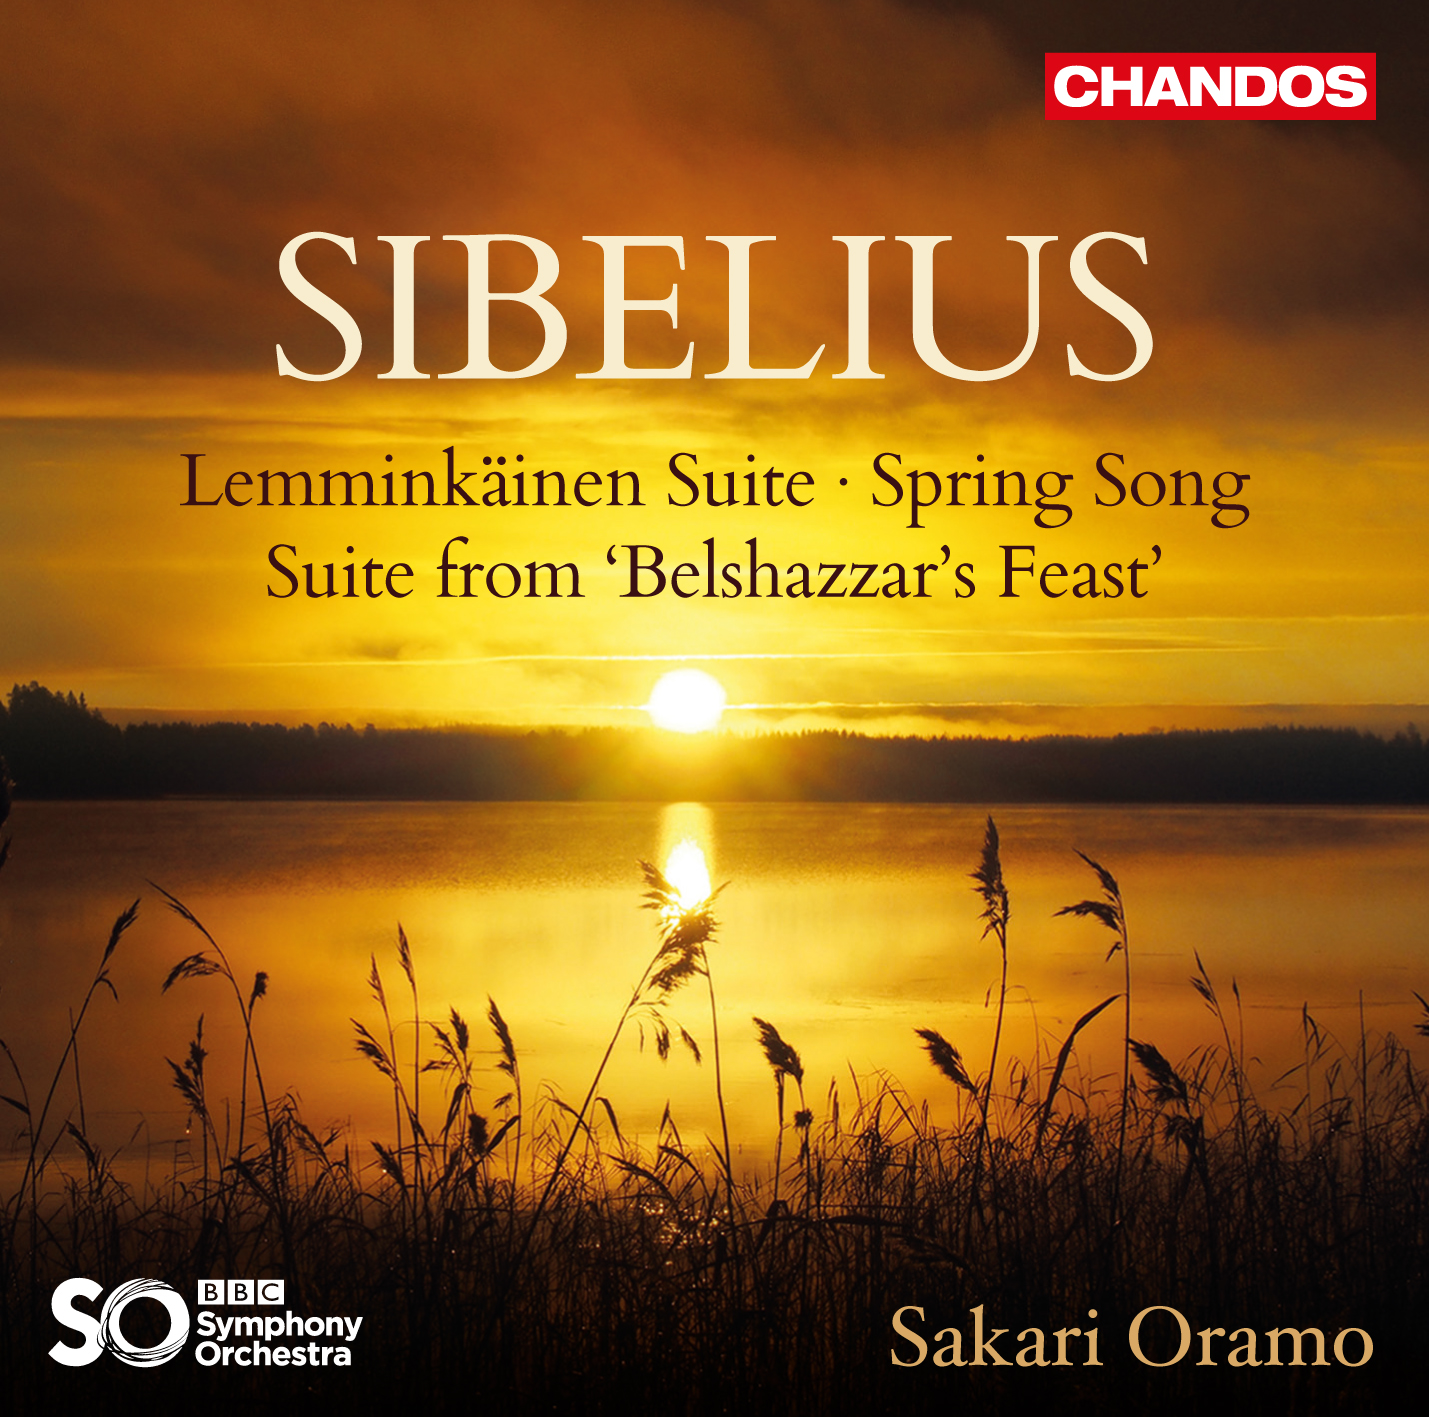 BBC Symphony Orchestra & Sakari Oramo - Sibelius: Lemminkainen Suite, etc (2019) [FLAC 24bit/48kHz]